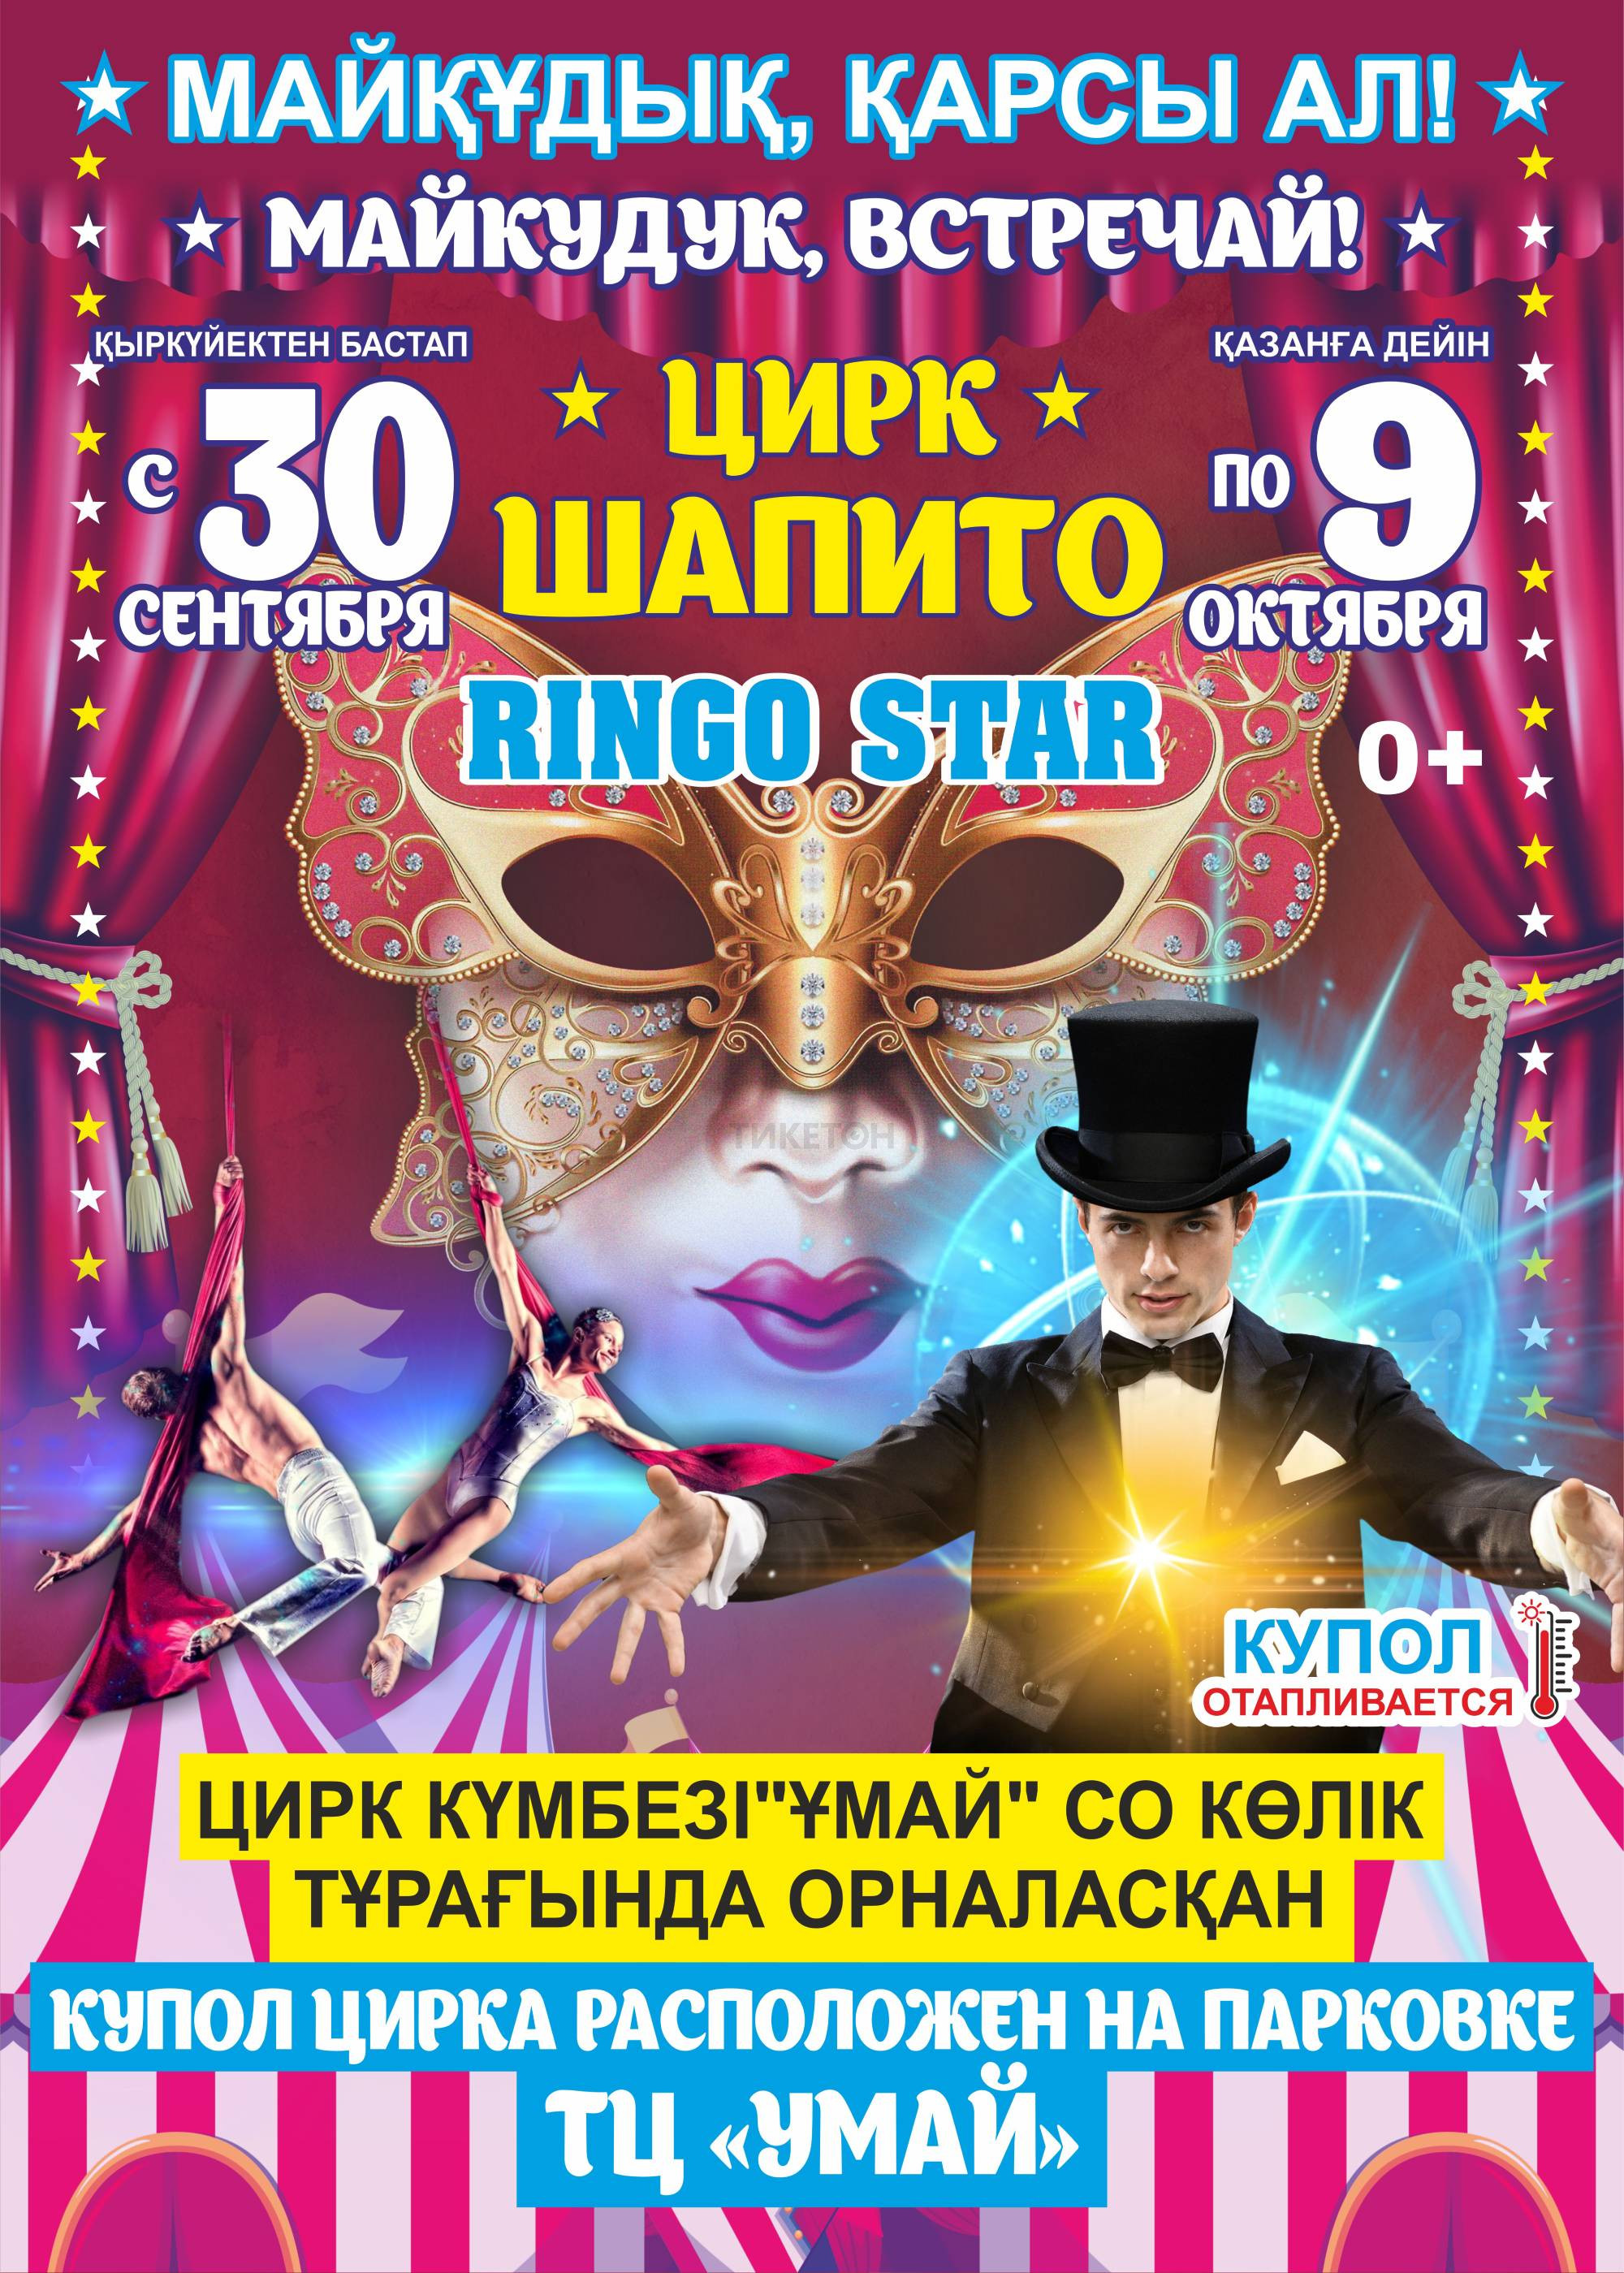 Цирк «Ringo Star» Майкудук